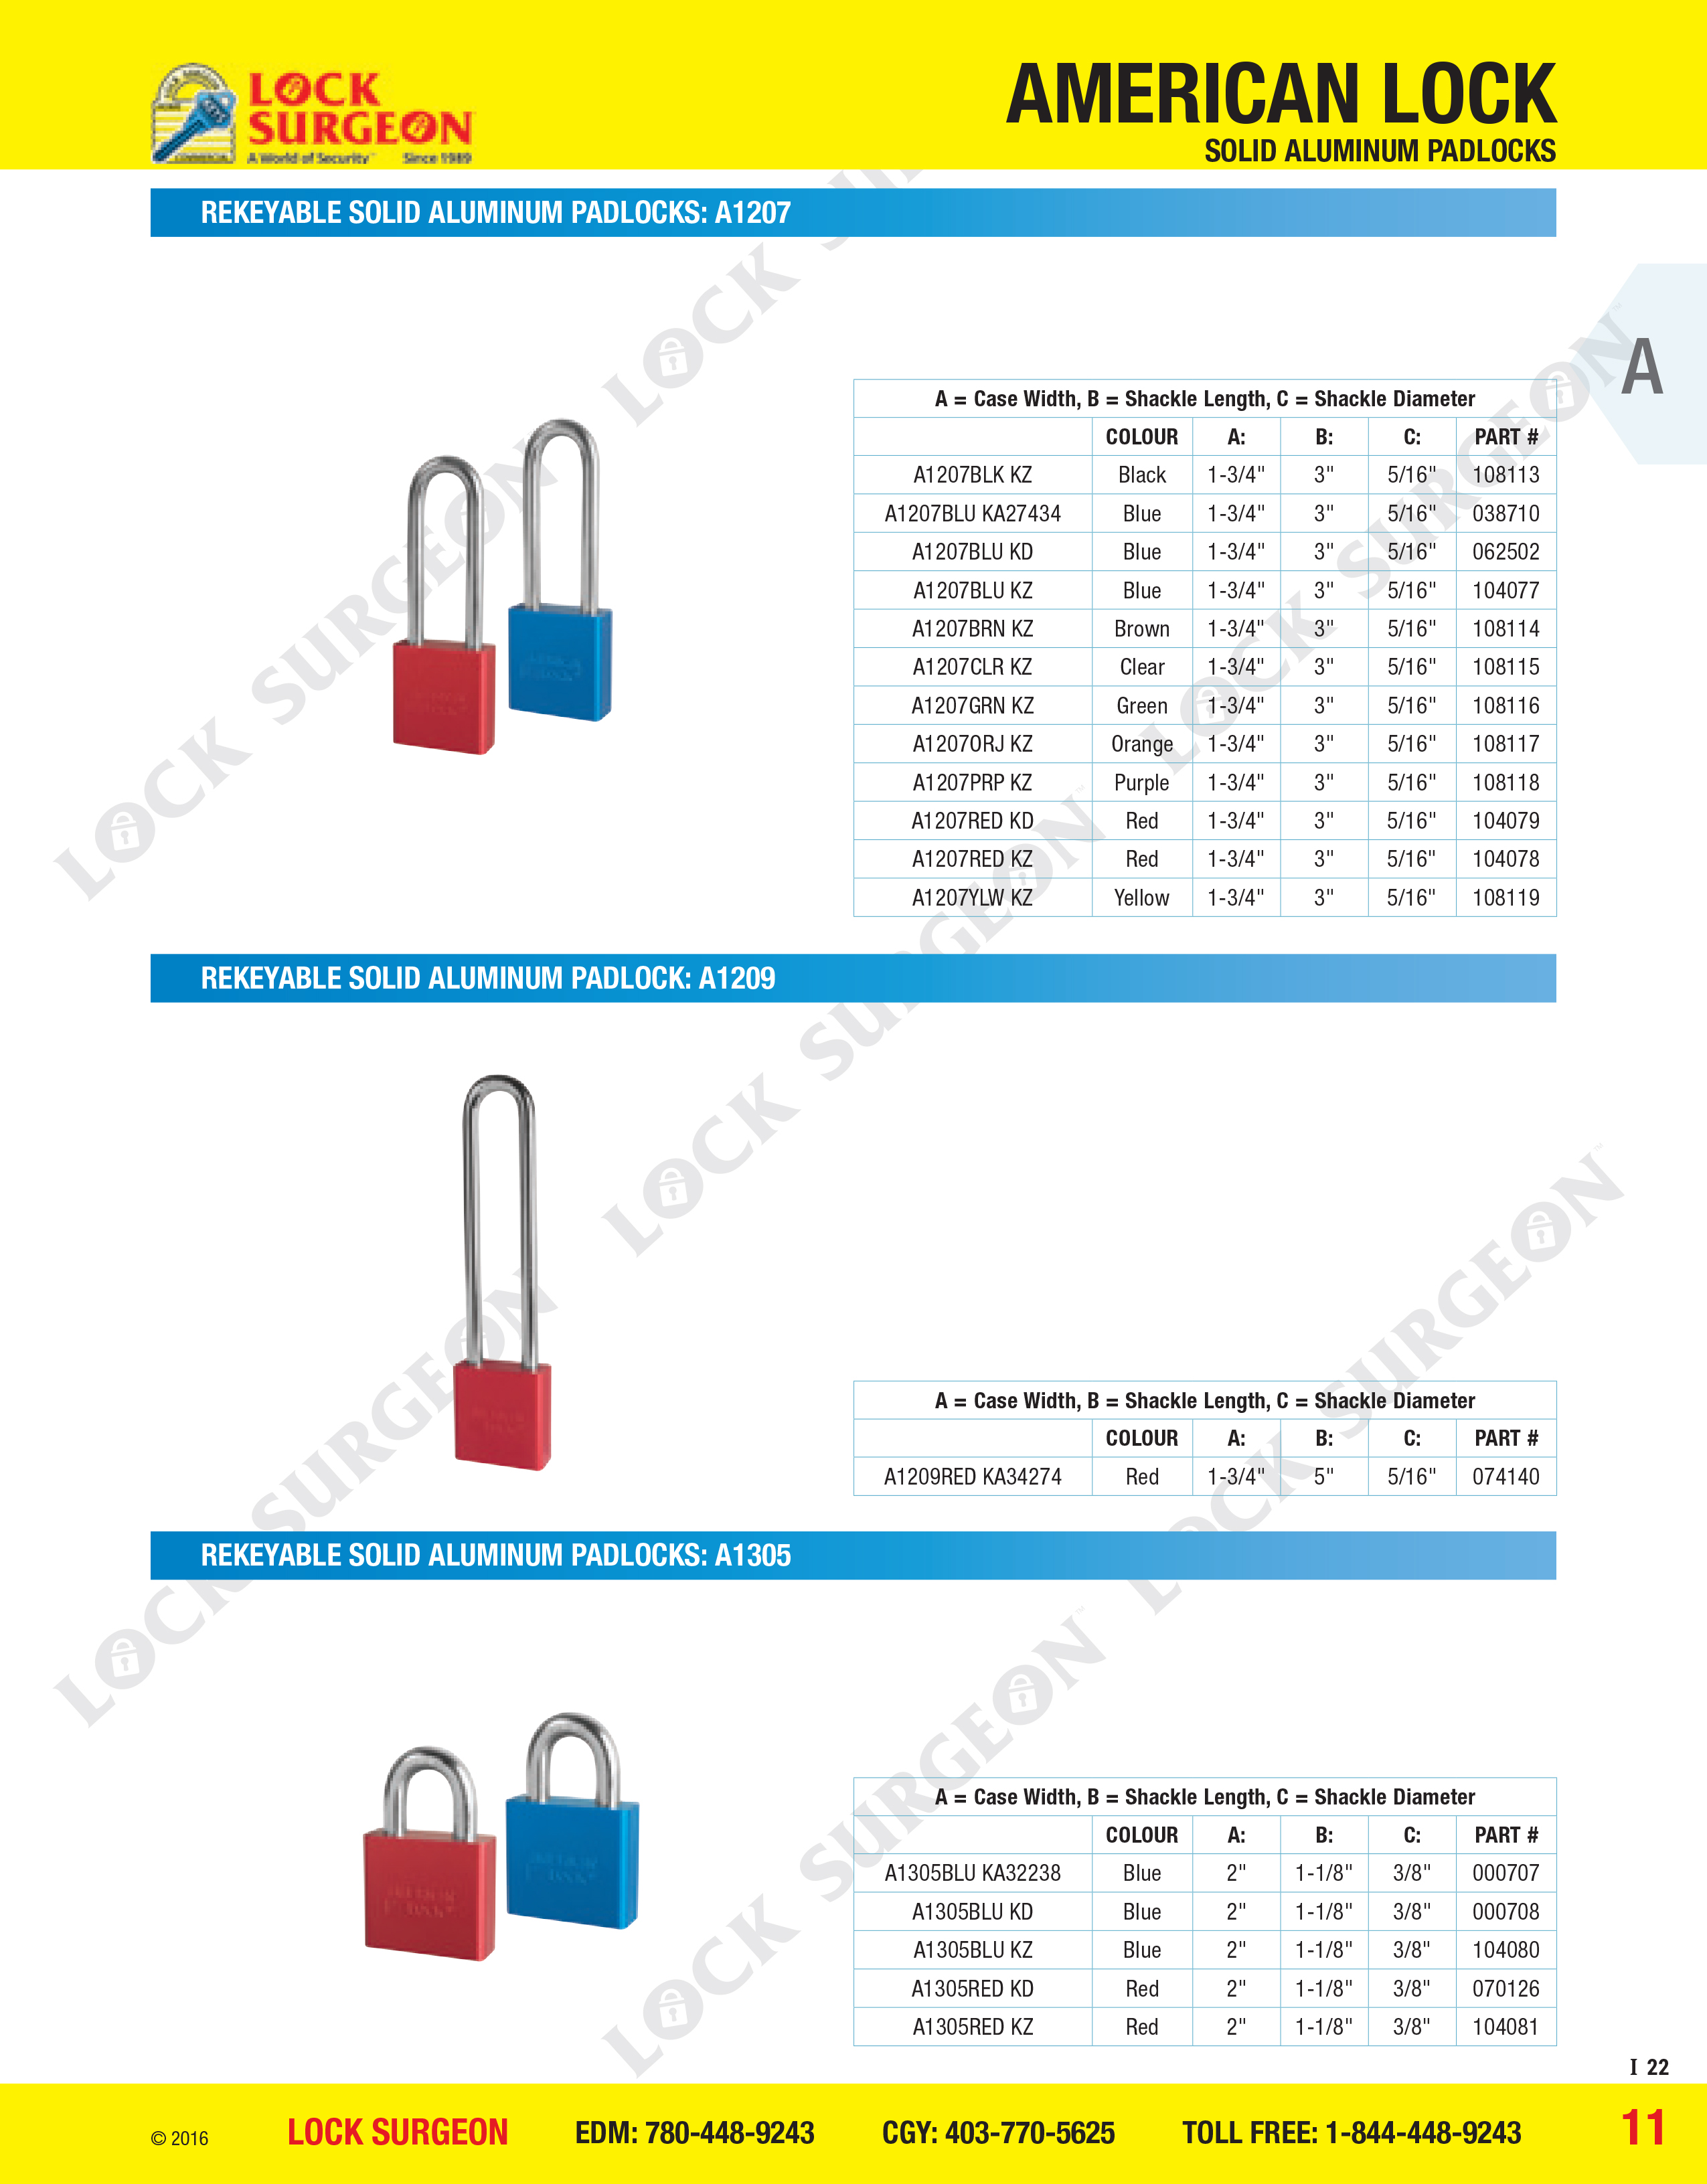 Acheson American Lock Rekeyable solid aluminium padlocks A1207, A1209 or A1305 series.